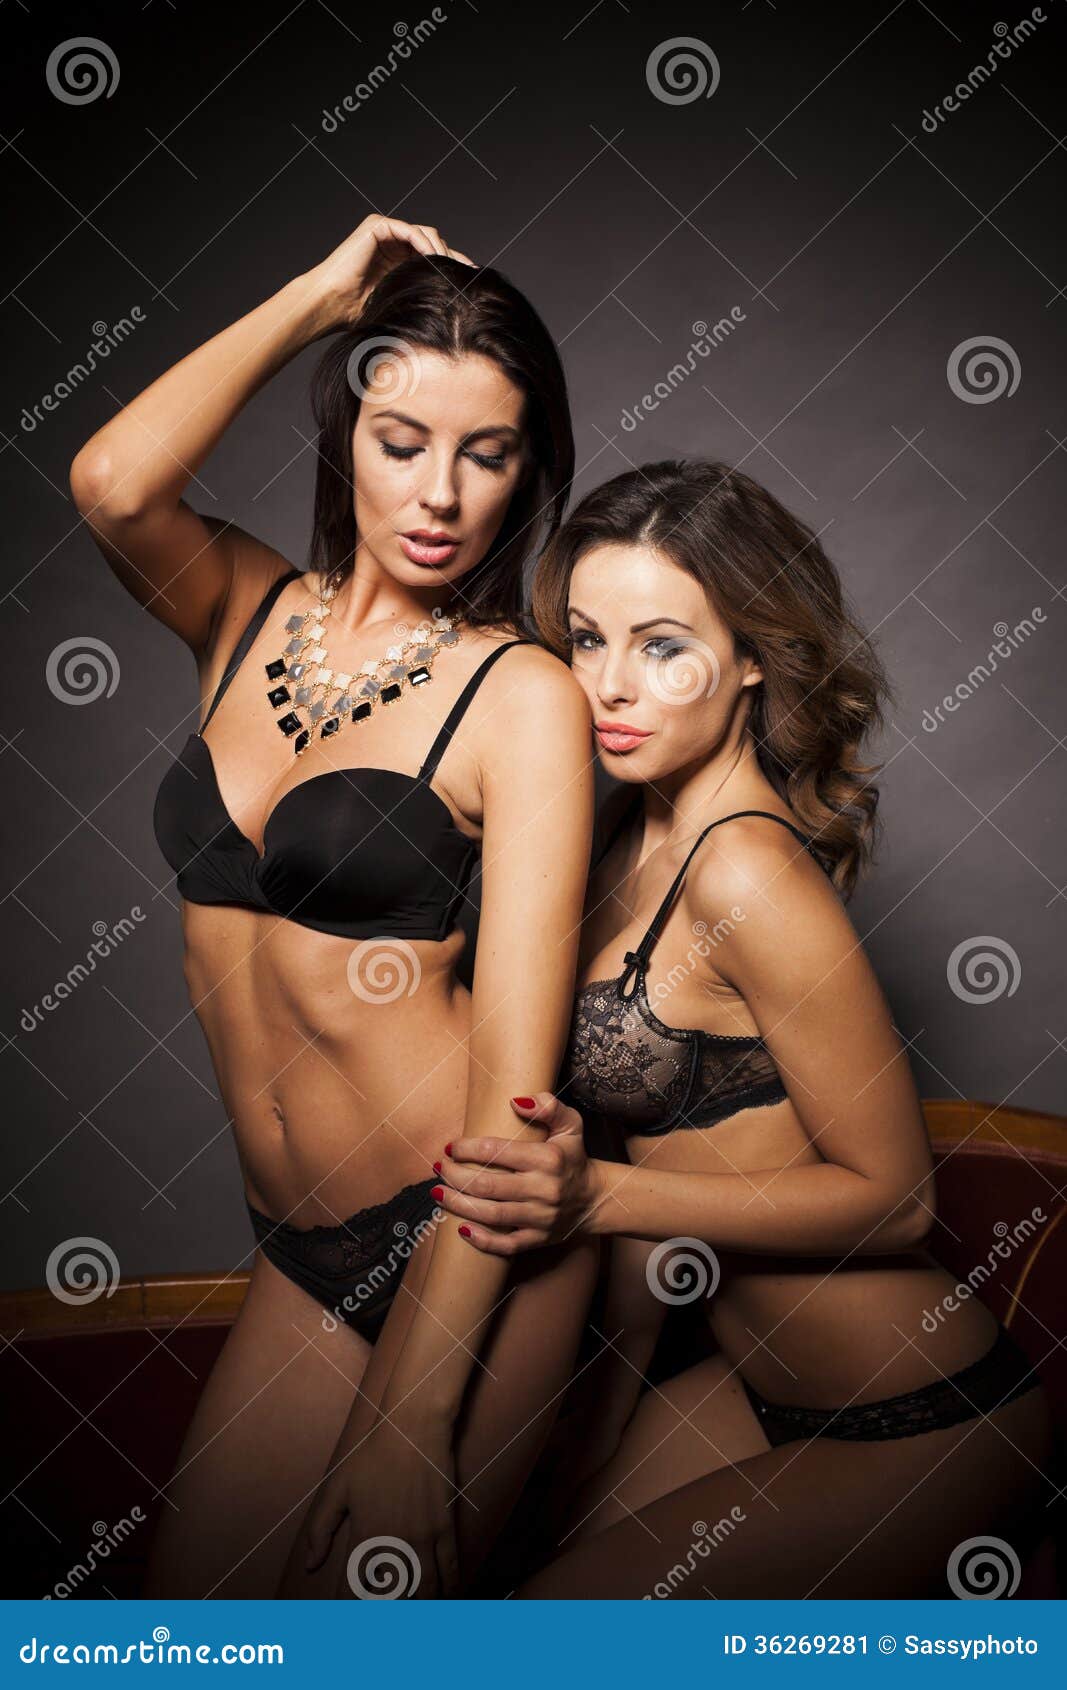 Two Lesbian Lingerie Women Hugging Stock Image - Image of